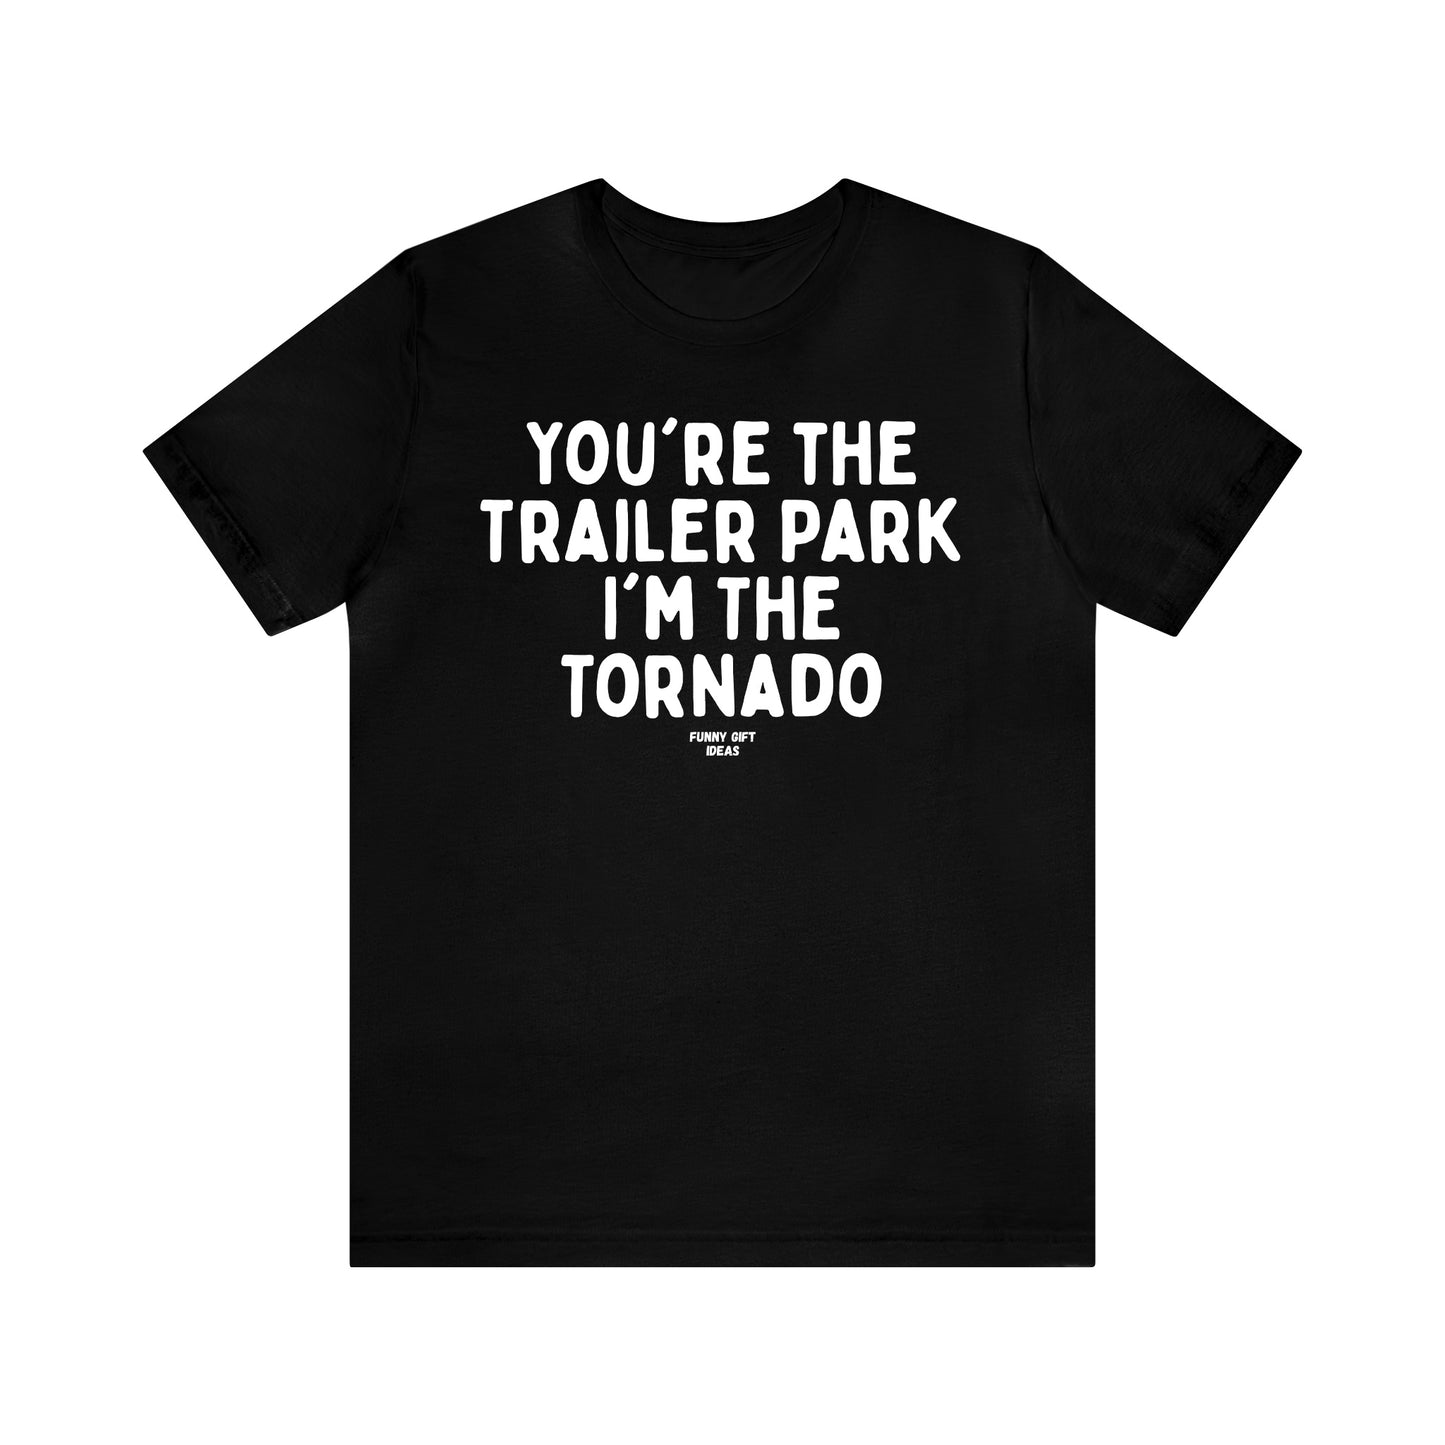 Funny Shirts for Women - You're the Trailer Park I'm the Tornado - Women's T Shirts